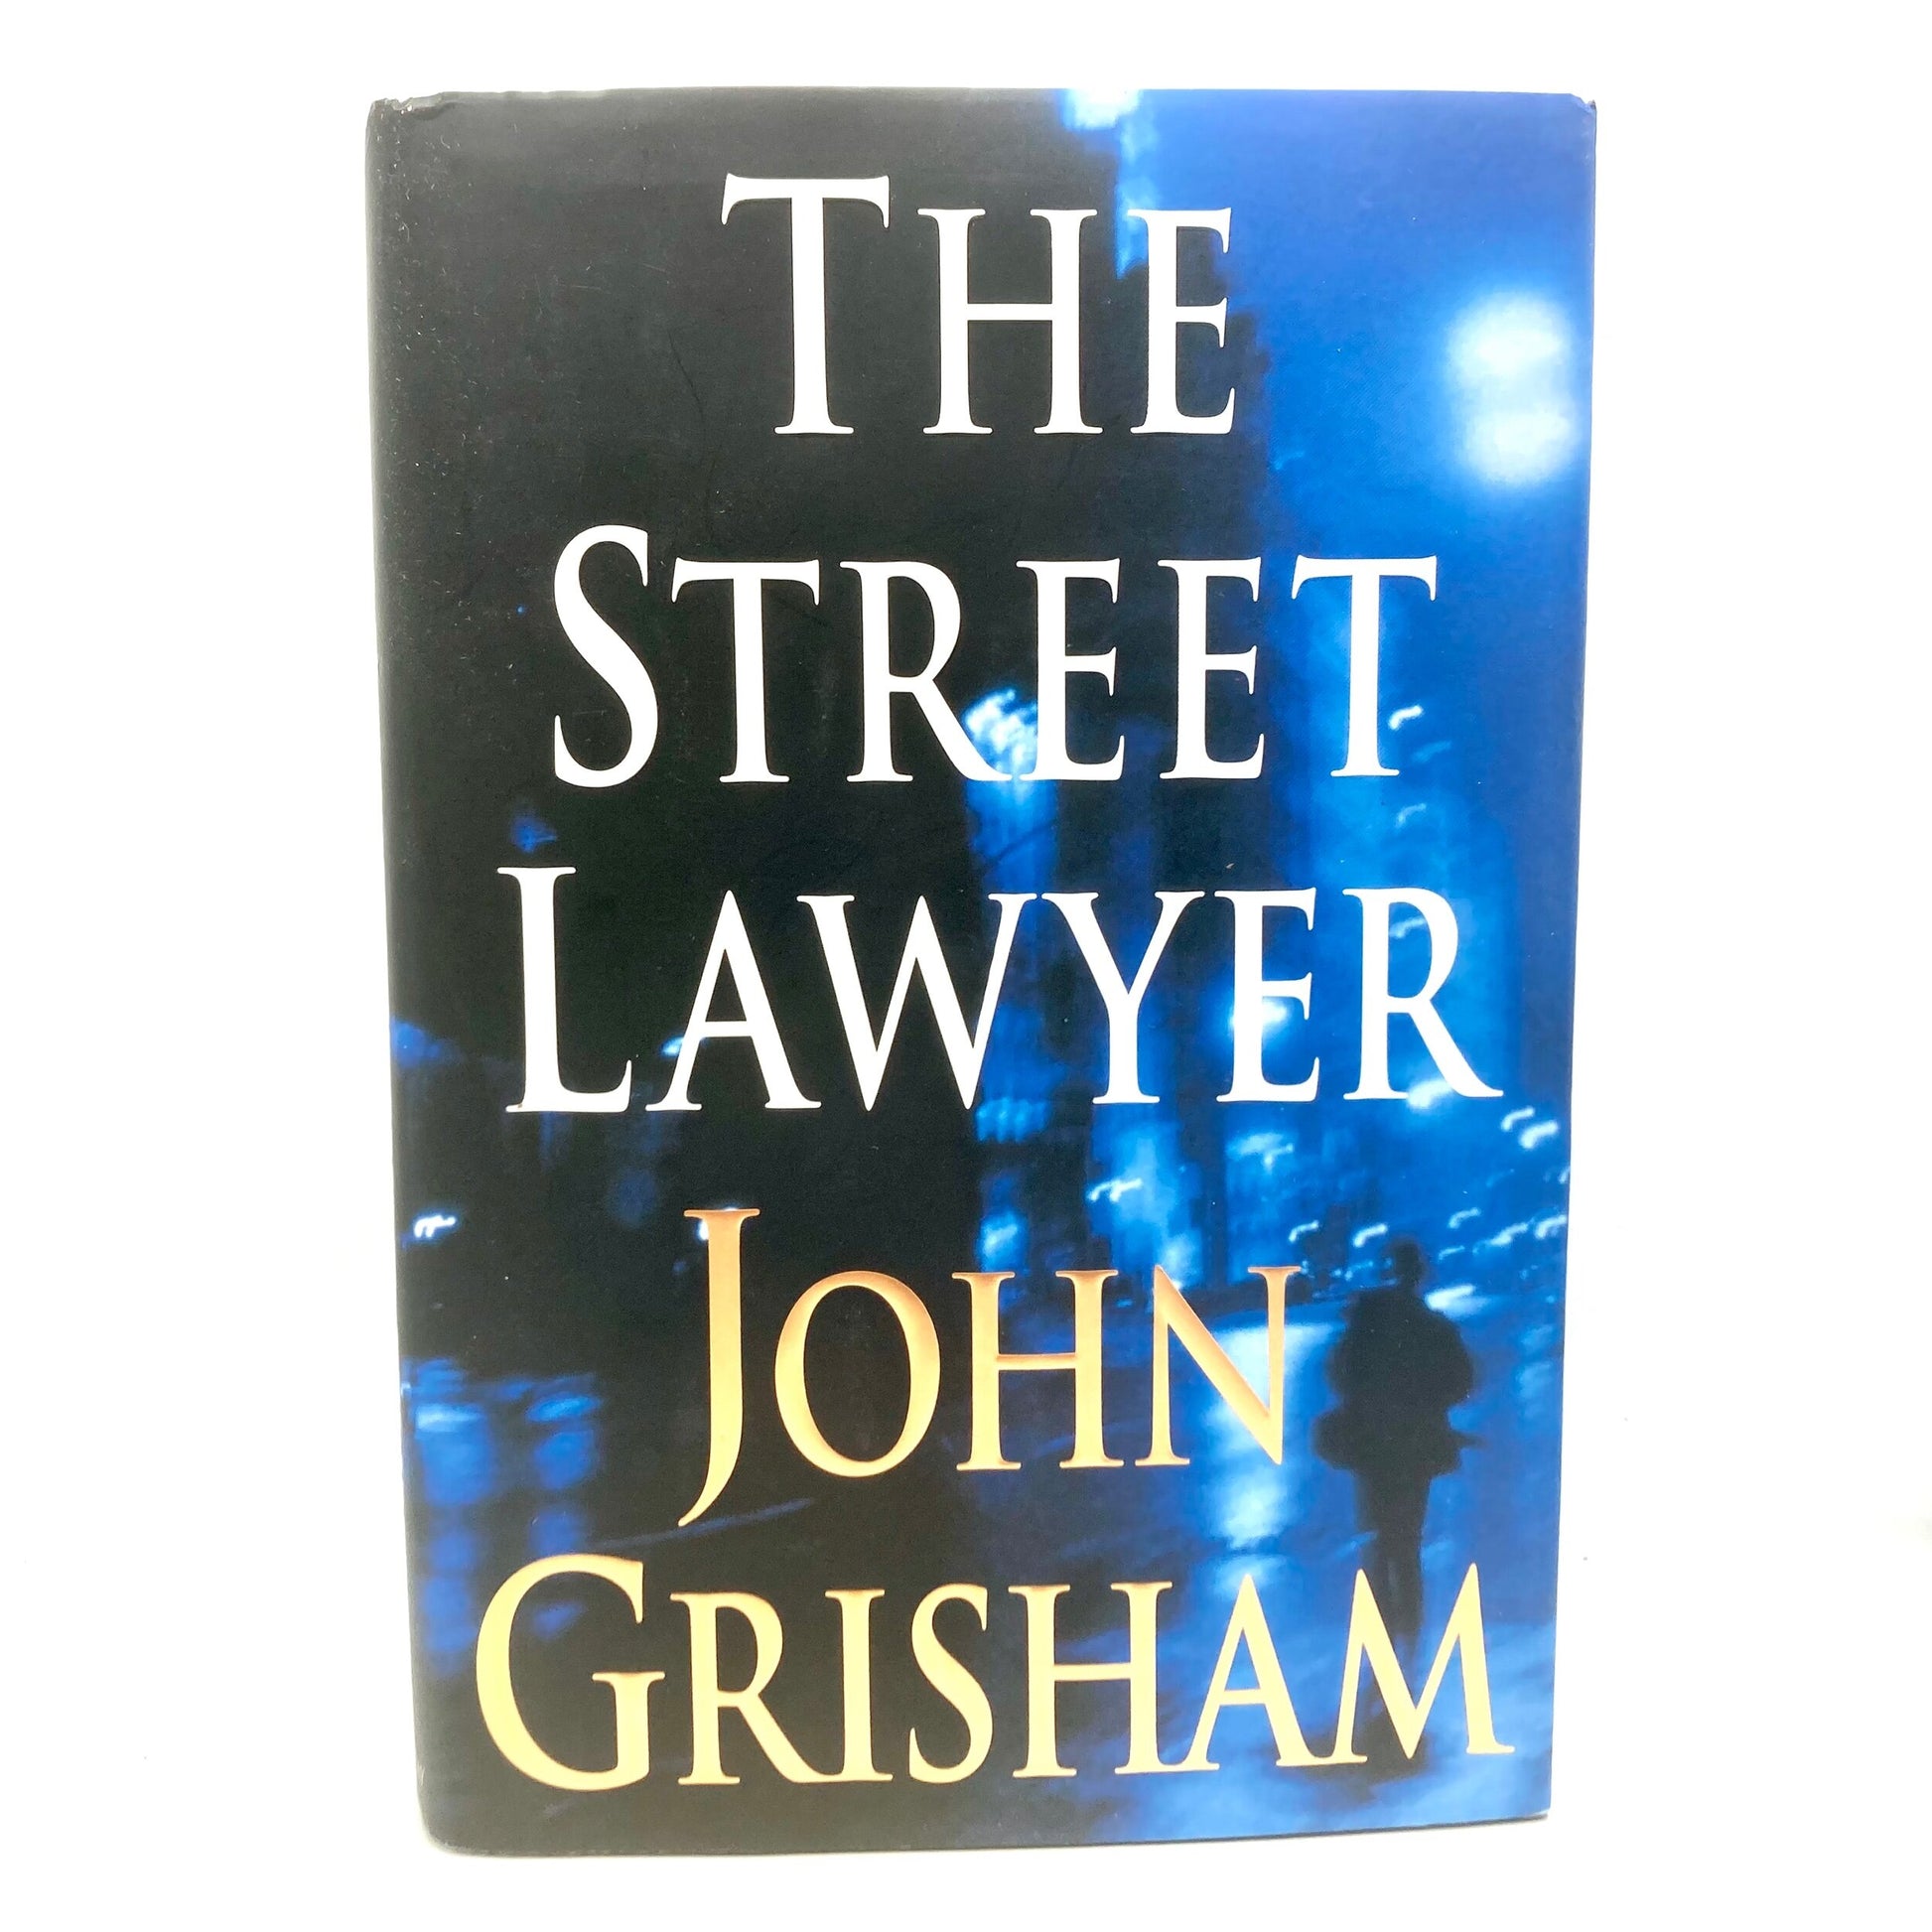 GRISHAM, John "The Street Lawyer" [Doubleday, 1998] 1st Edition (Signed) - Buzz Bookstore